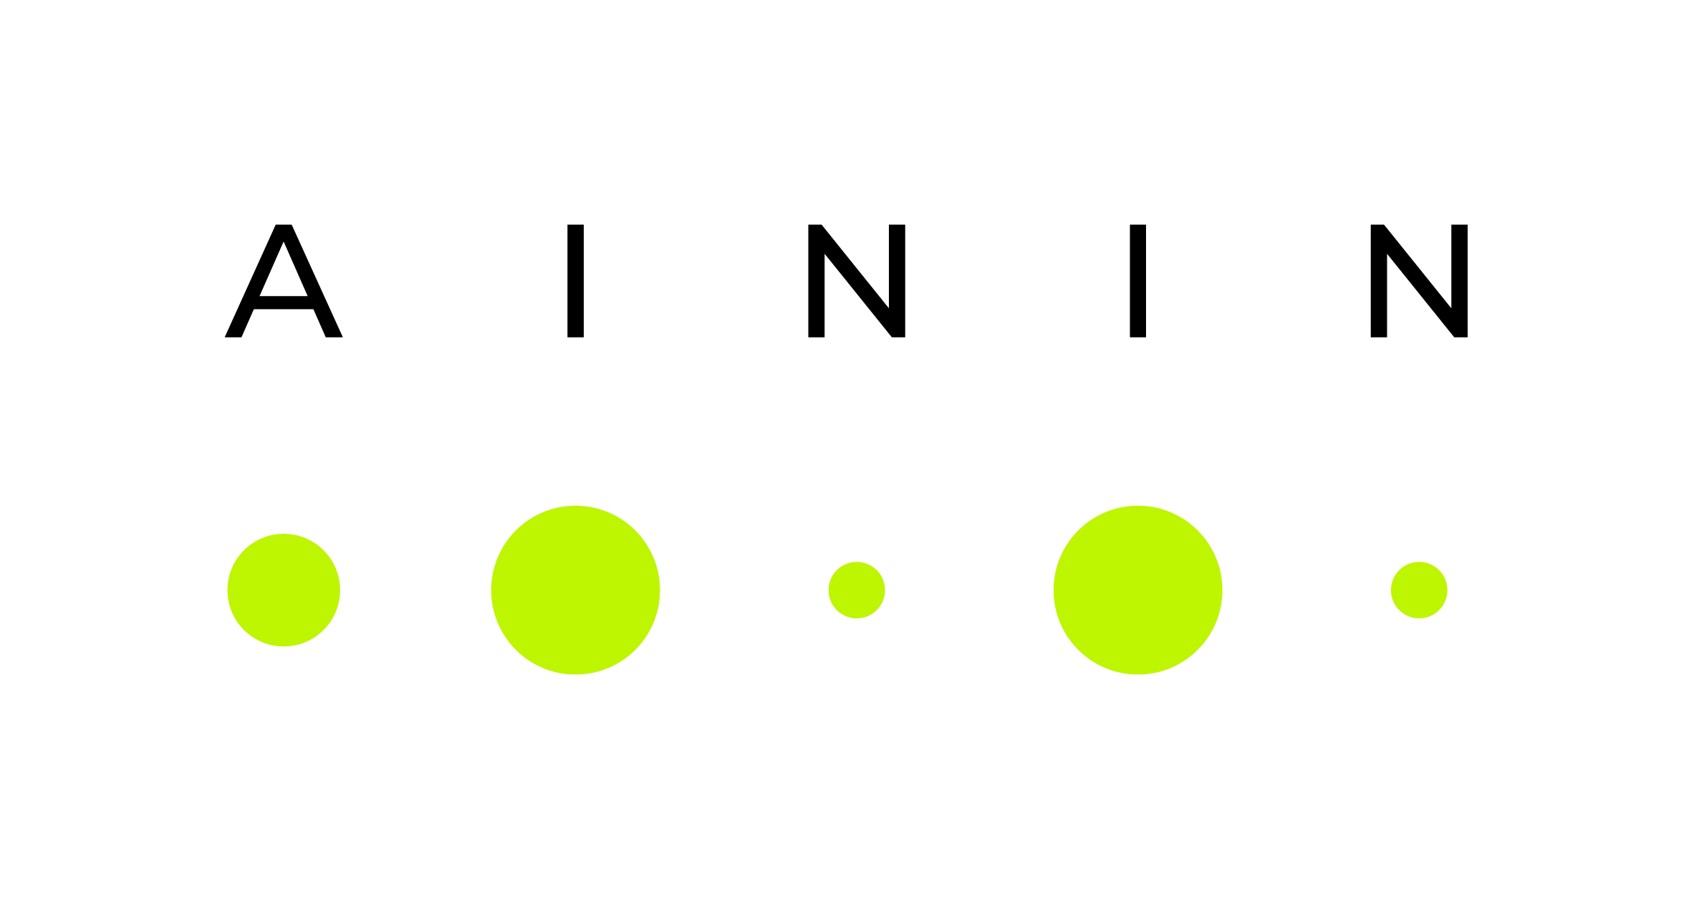 Image of the AININ logo